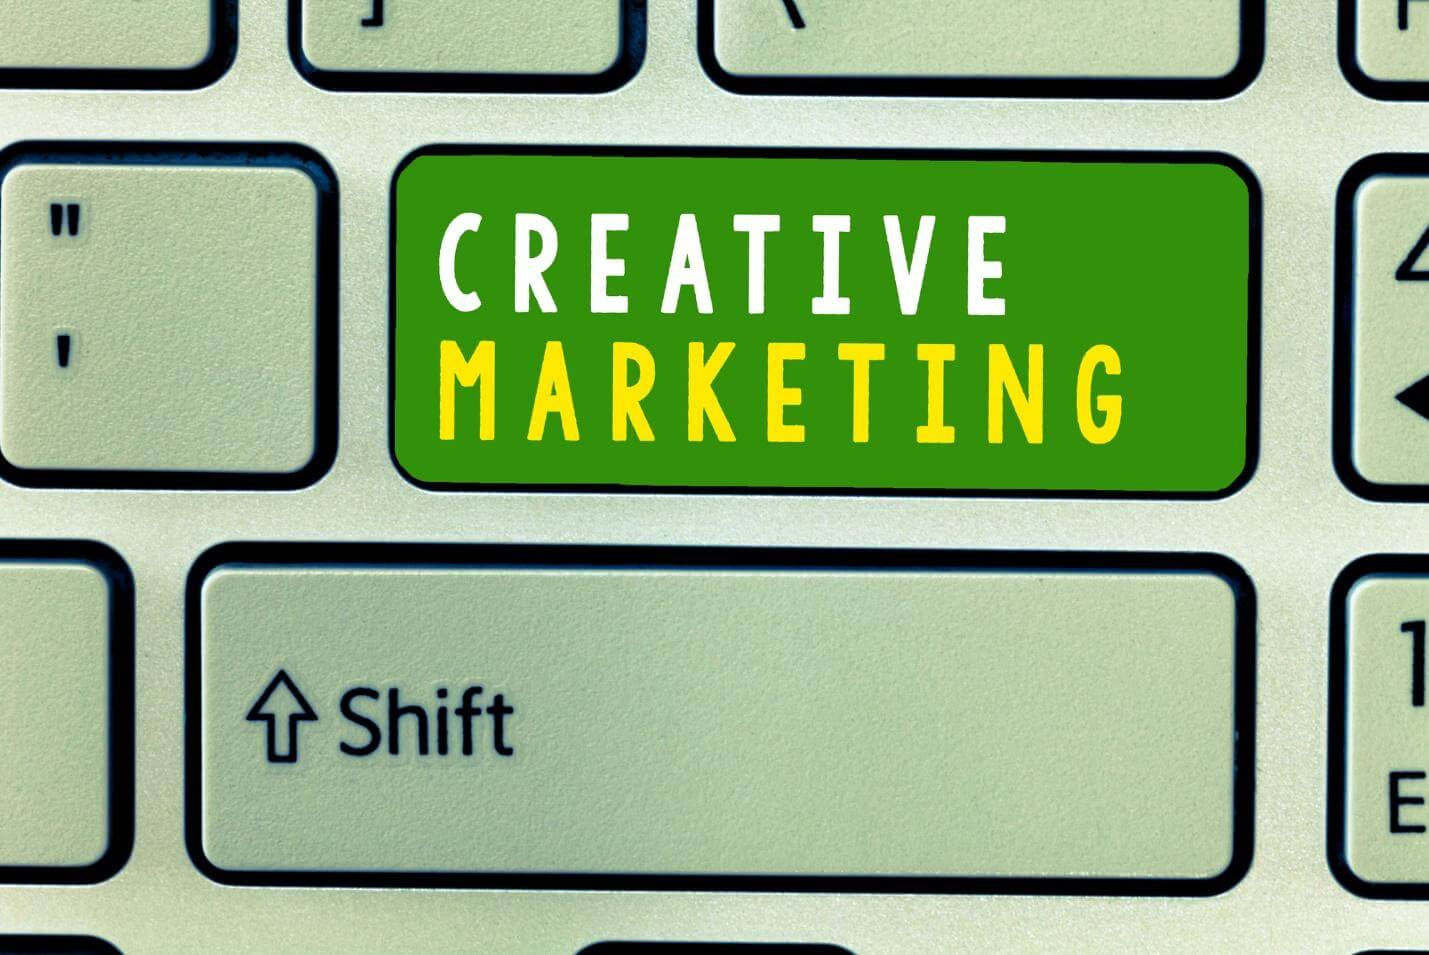 Creative Marketing Ideas